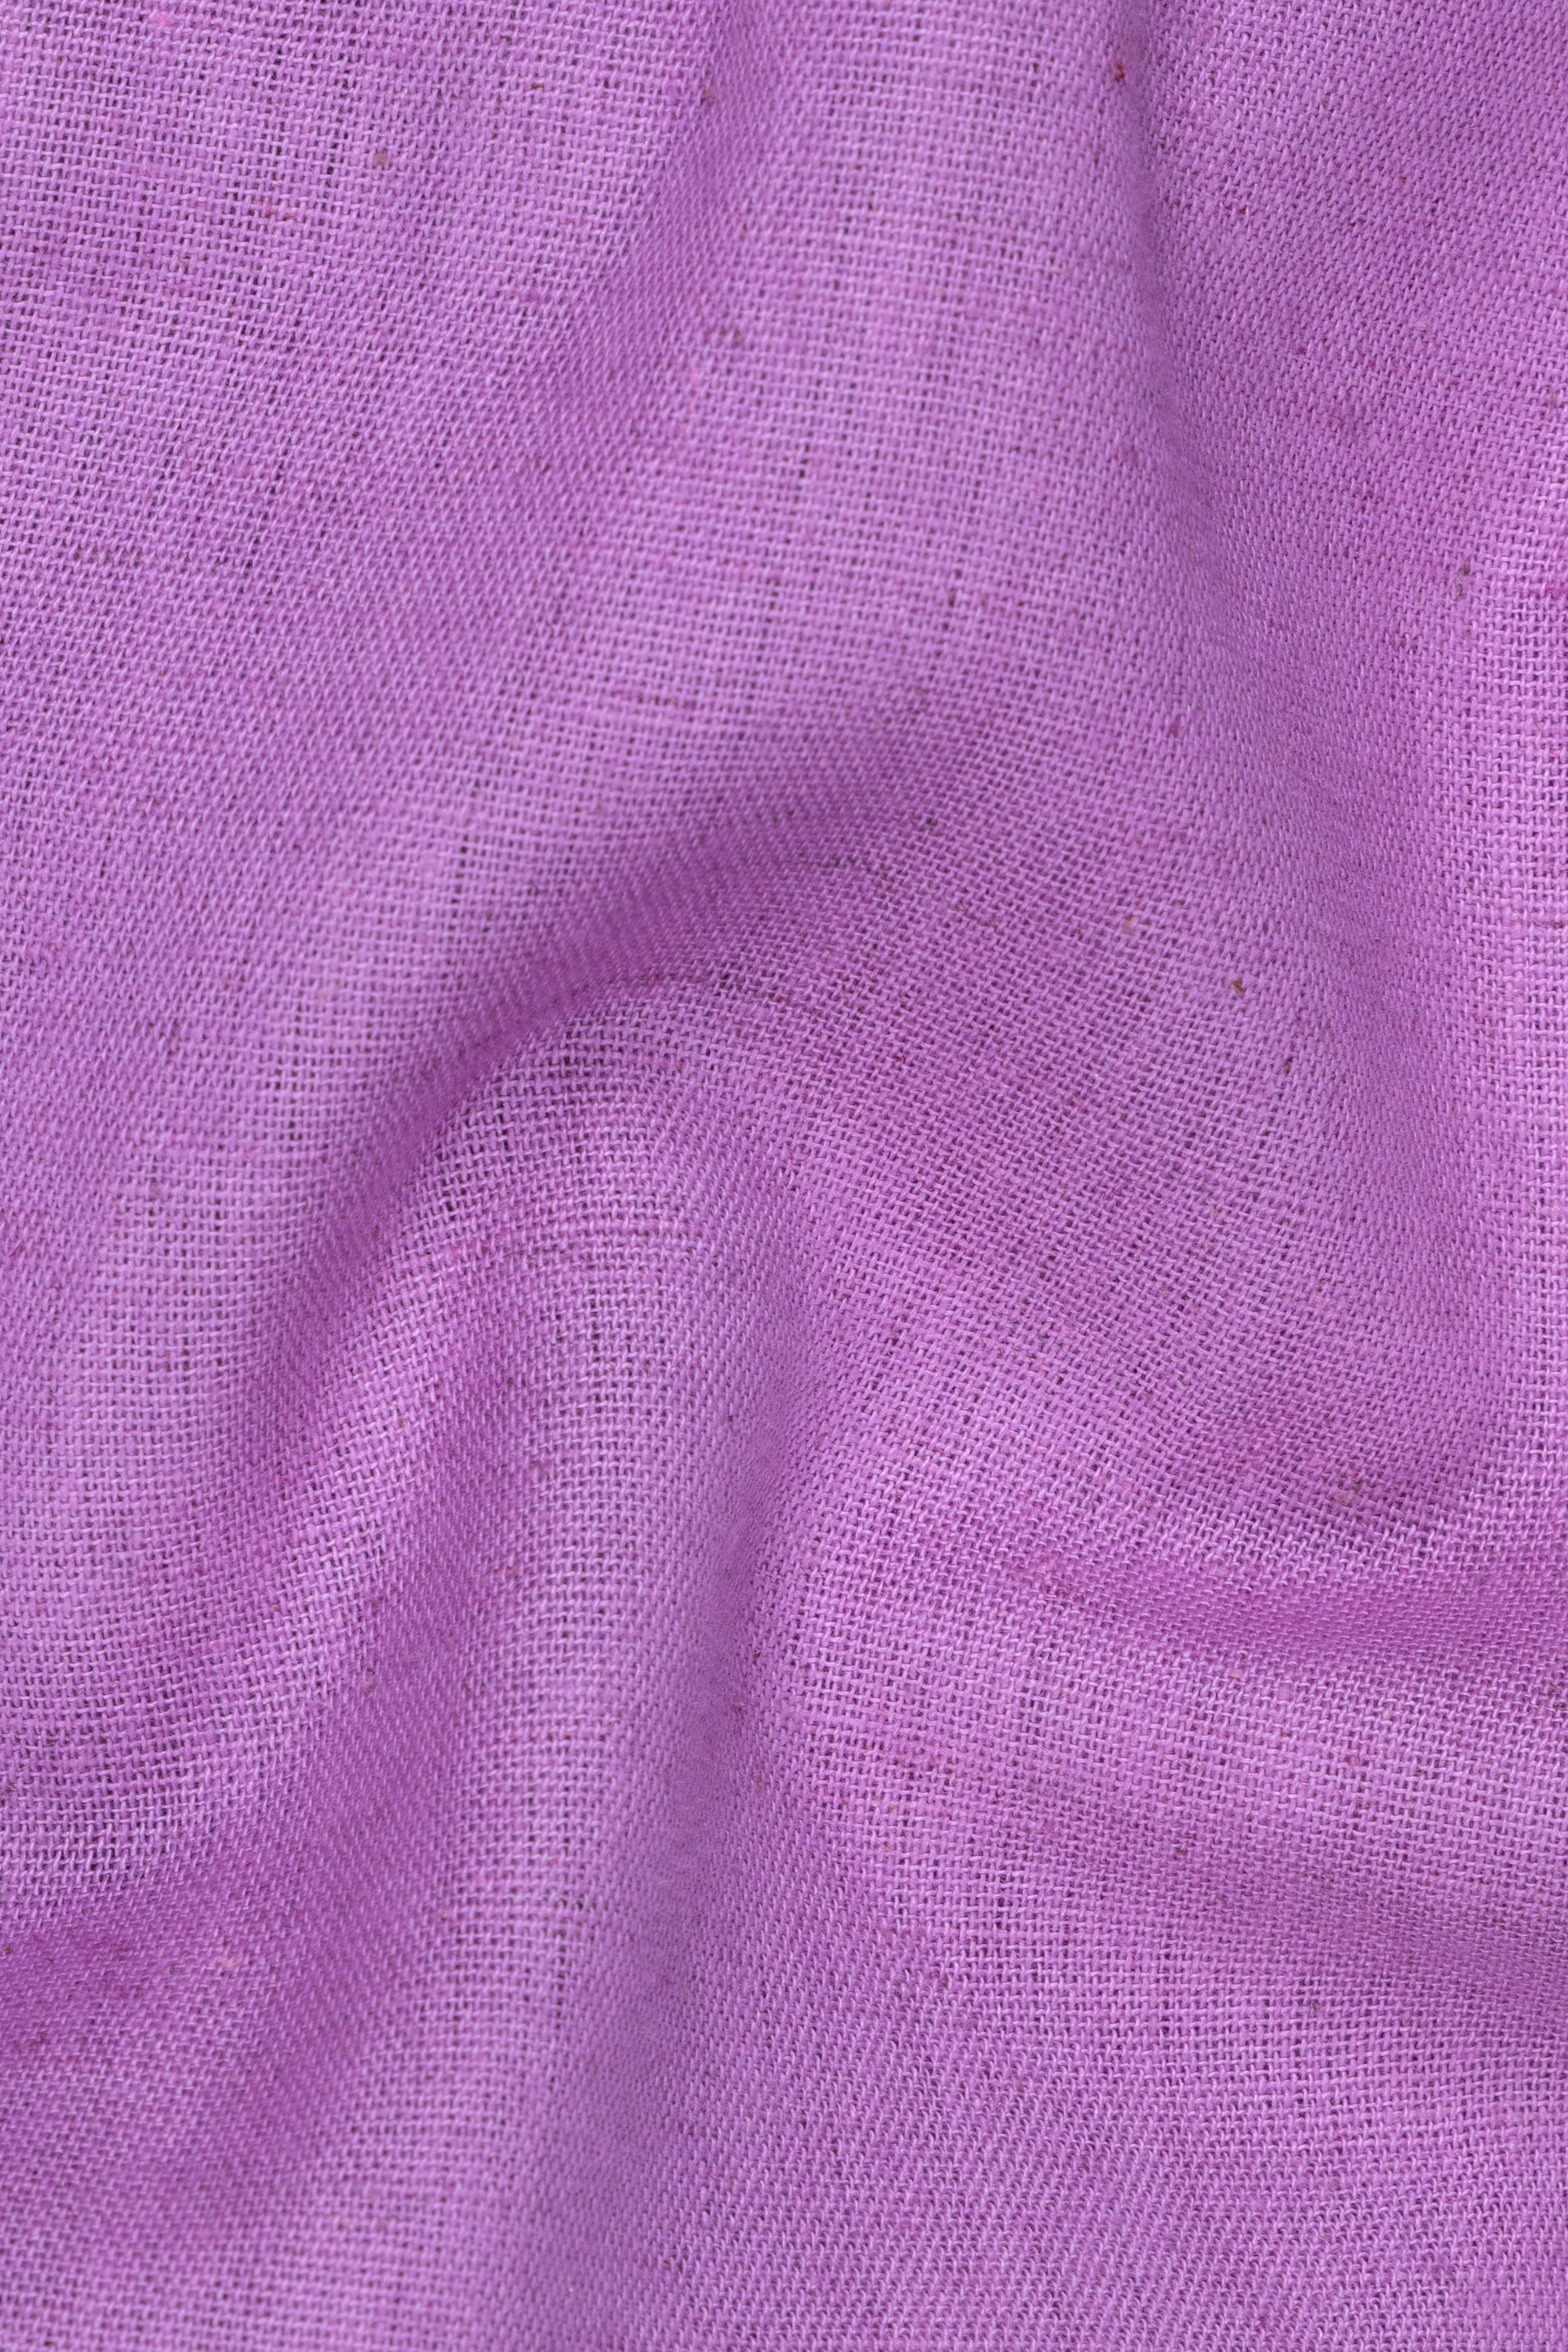 Wisteria Purple Luxurious Linen Lounge Pant